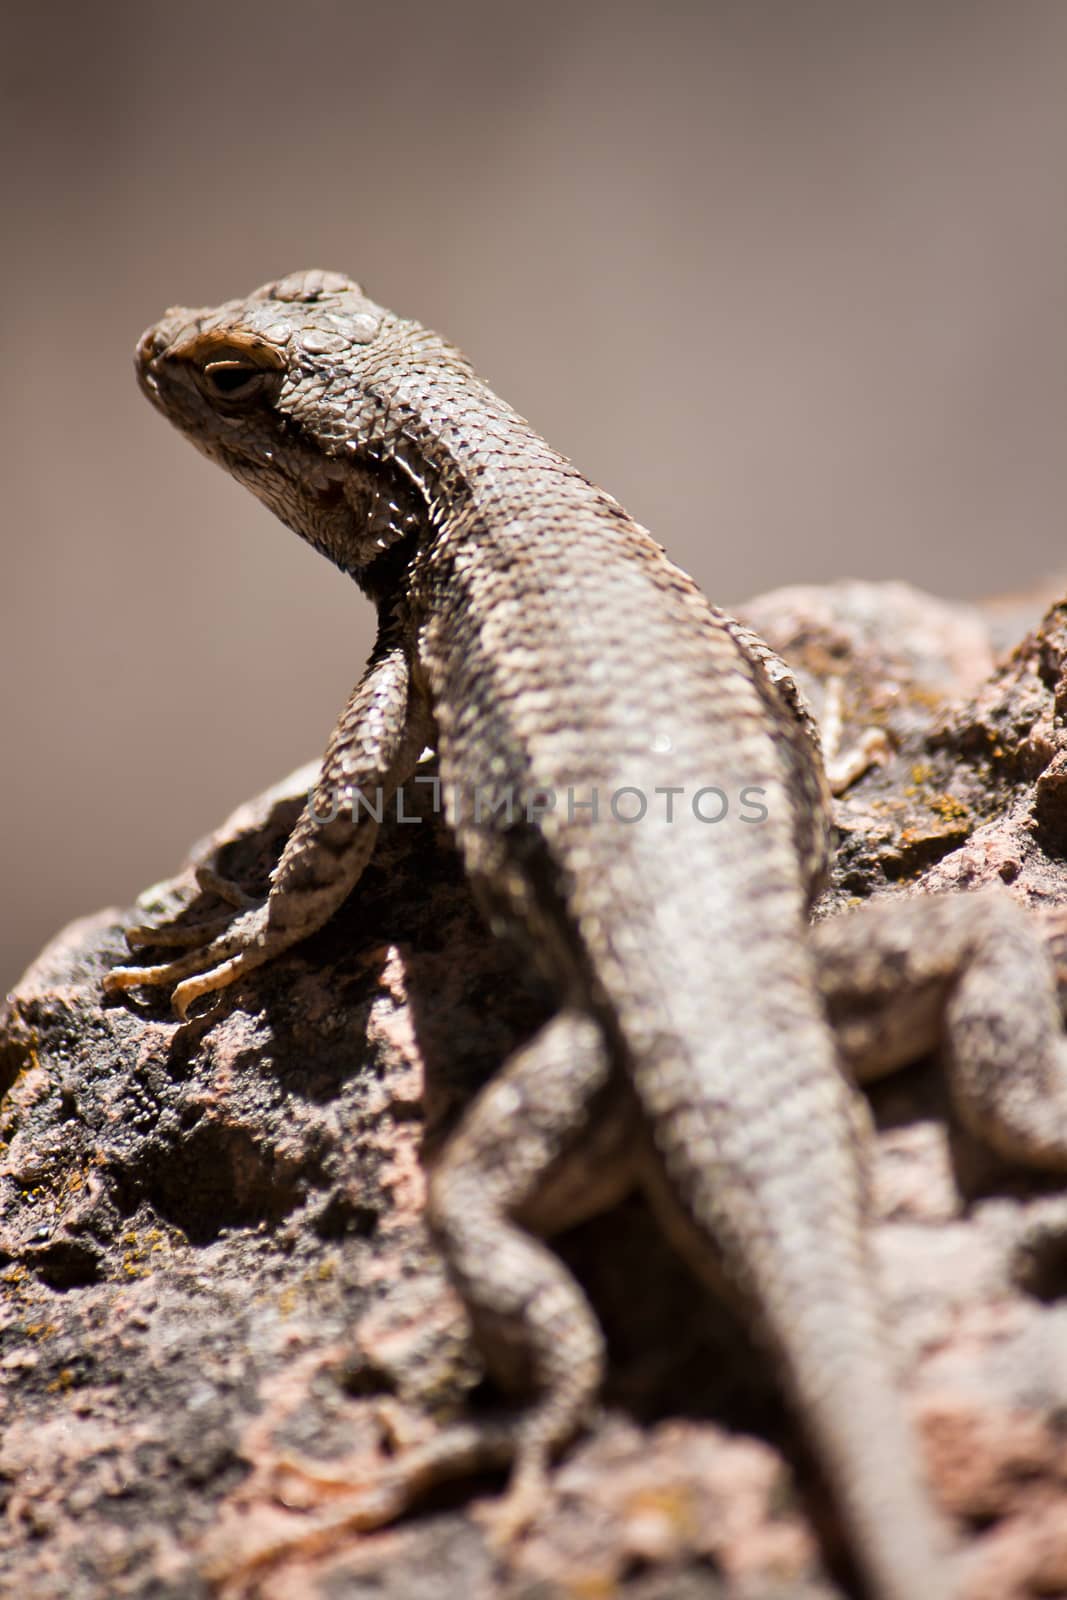 Desert Lizard on Rock in New Mexico by NikkiGensert